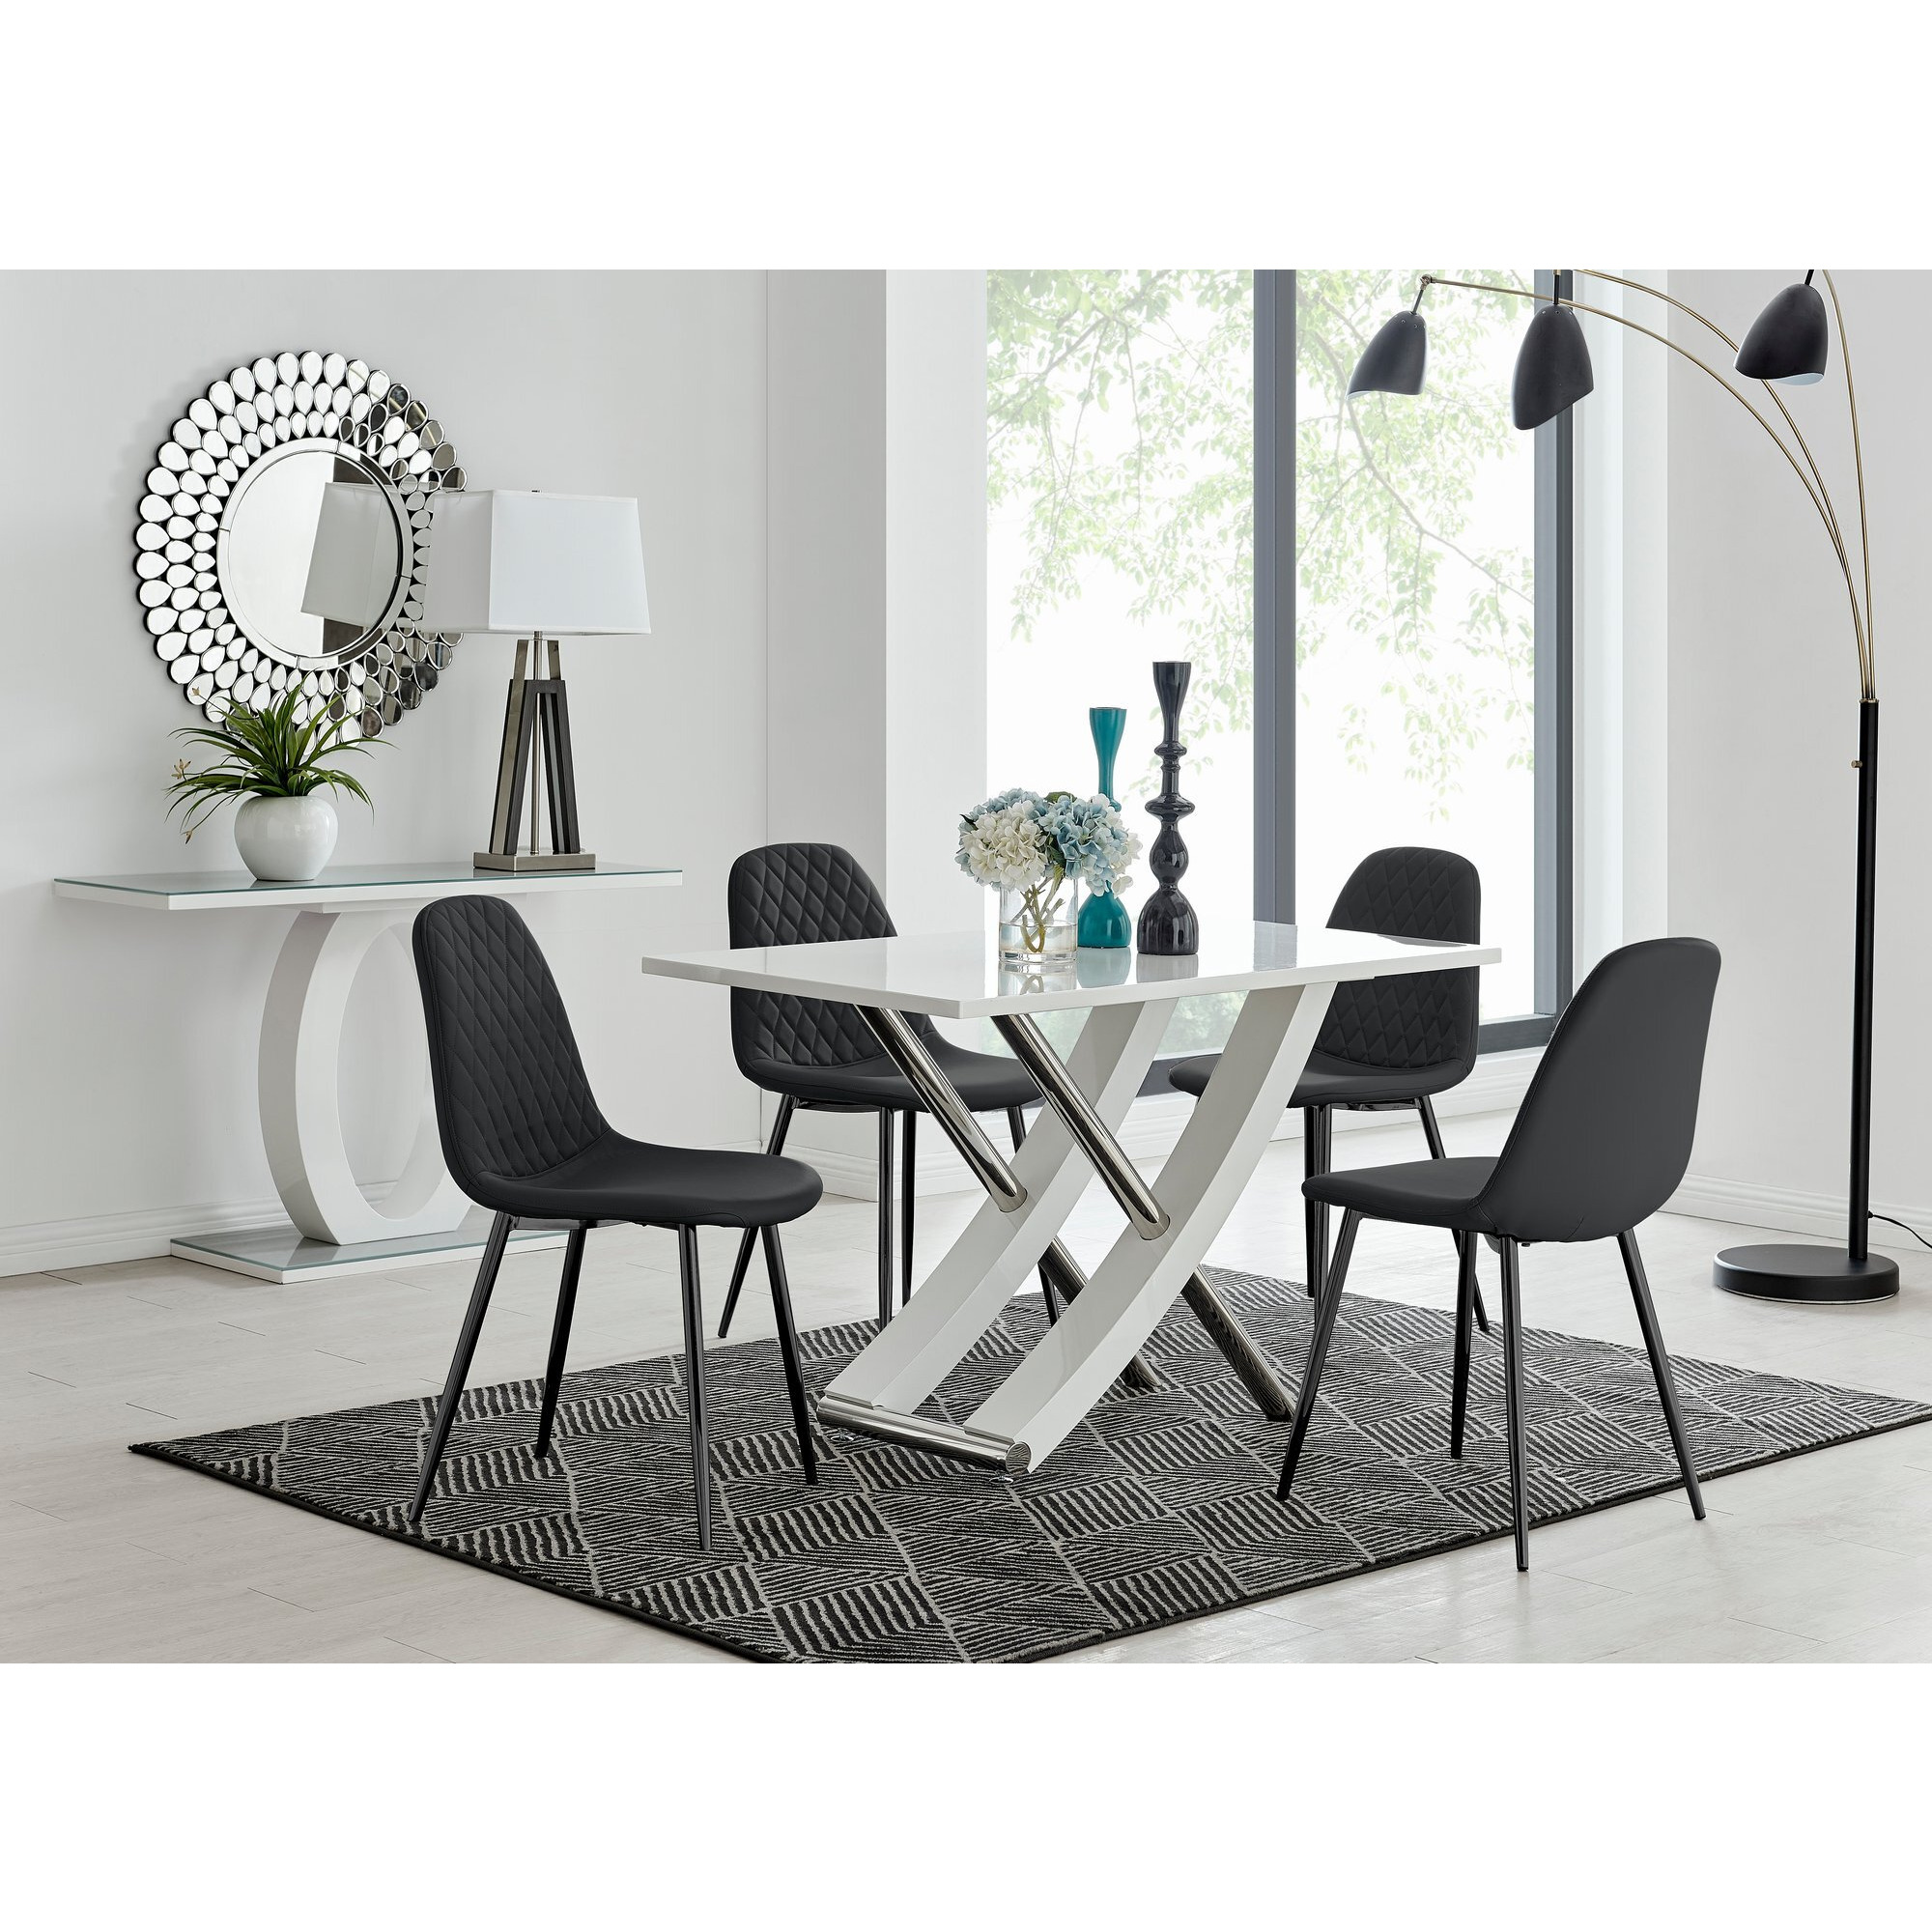 Mayfair 4 Dining Table and 4 Corona Black Leg Chairs